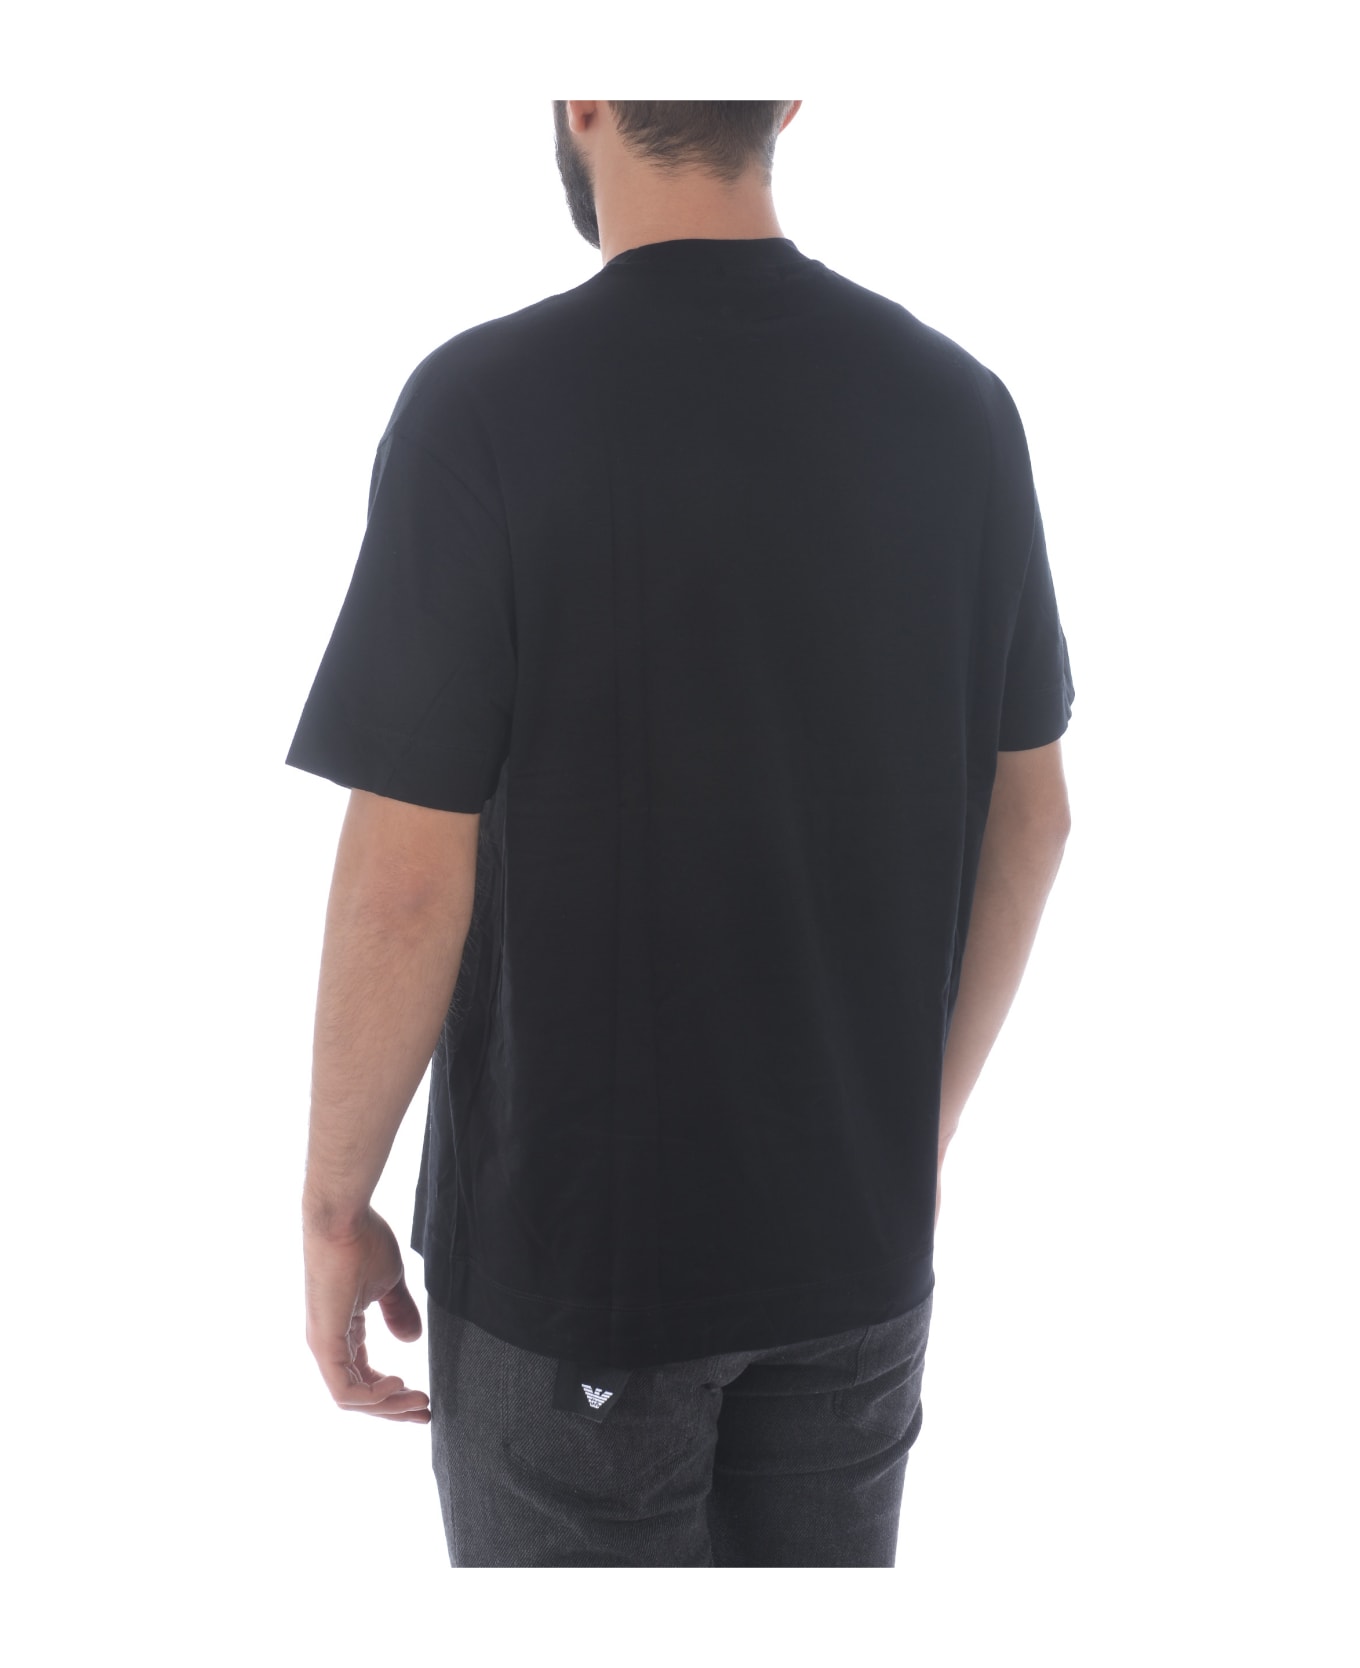 Emporio Armani T-shirt In Cotton And Lyocell Blend - Nero シャツ